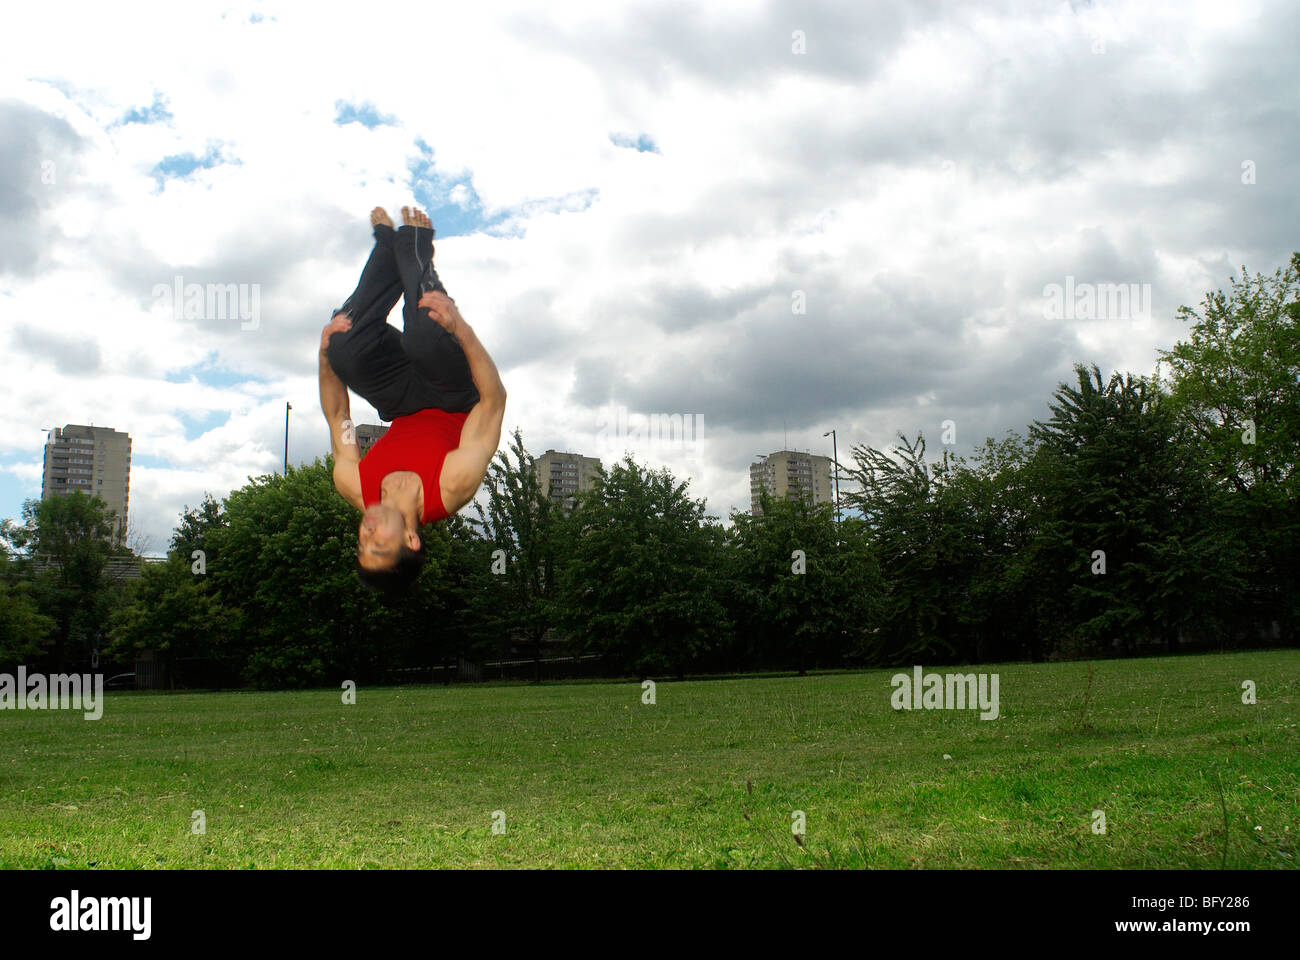 somersault in park Stock Photo